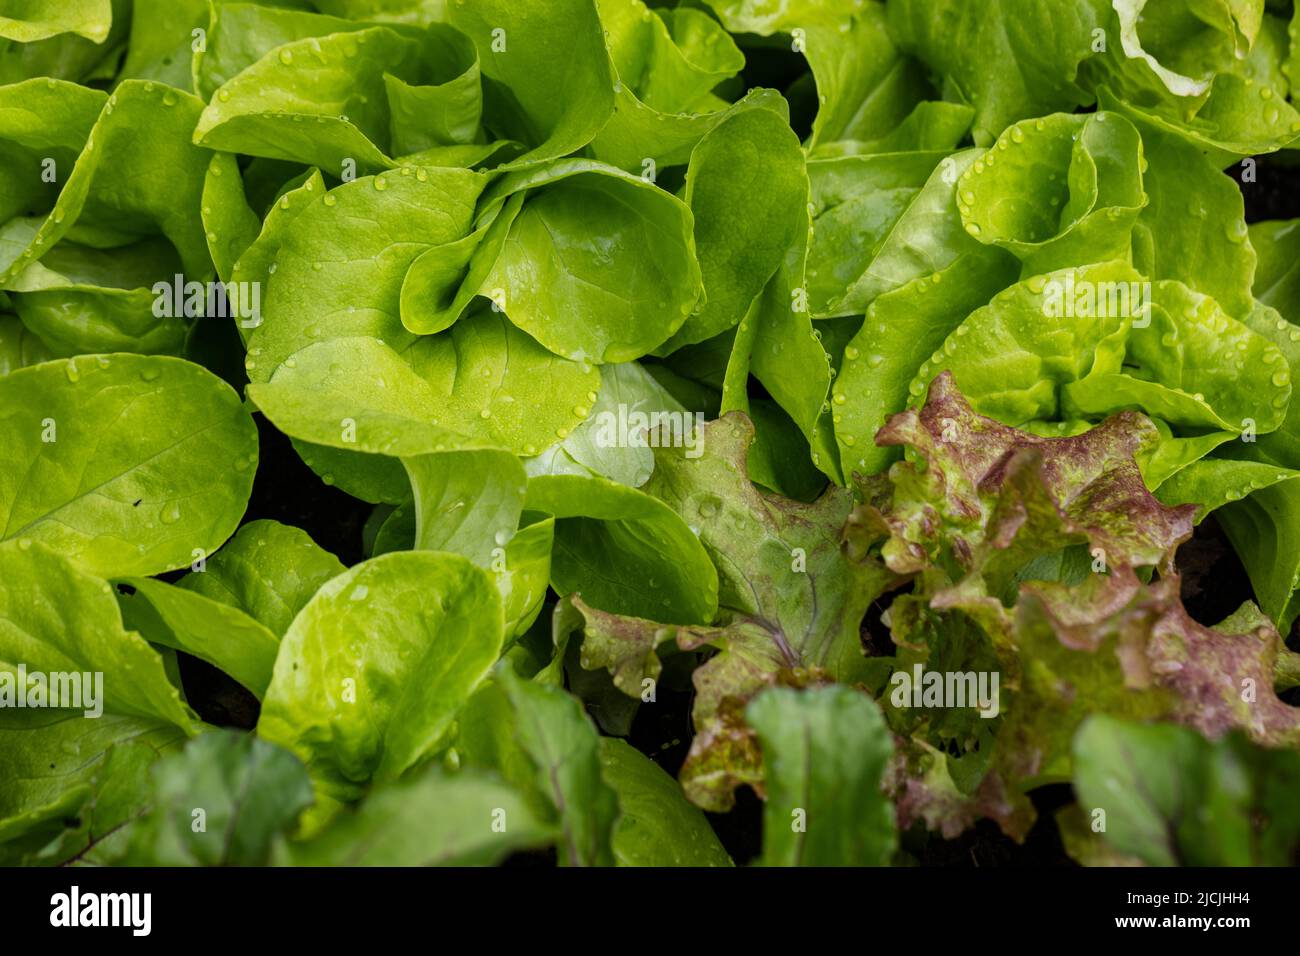 'Kagraner Sommer 2' Lettuce, Sallat (Lactuca sativa) Stock Photo